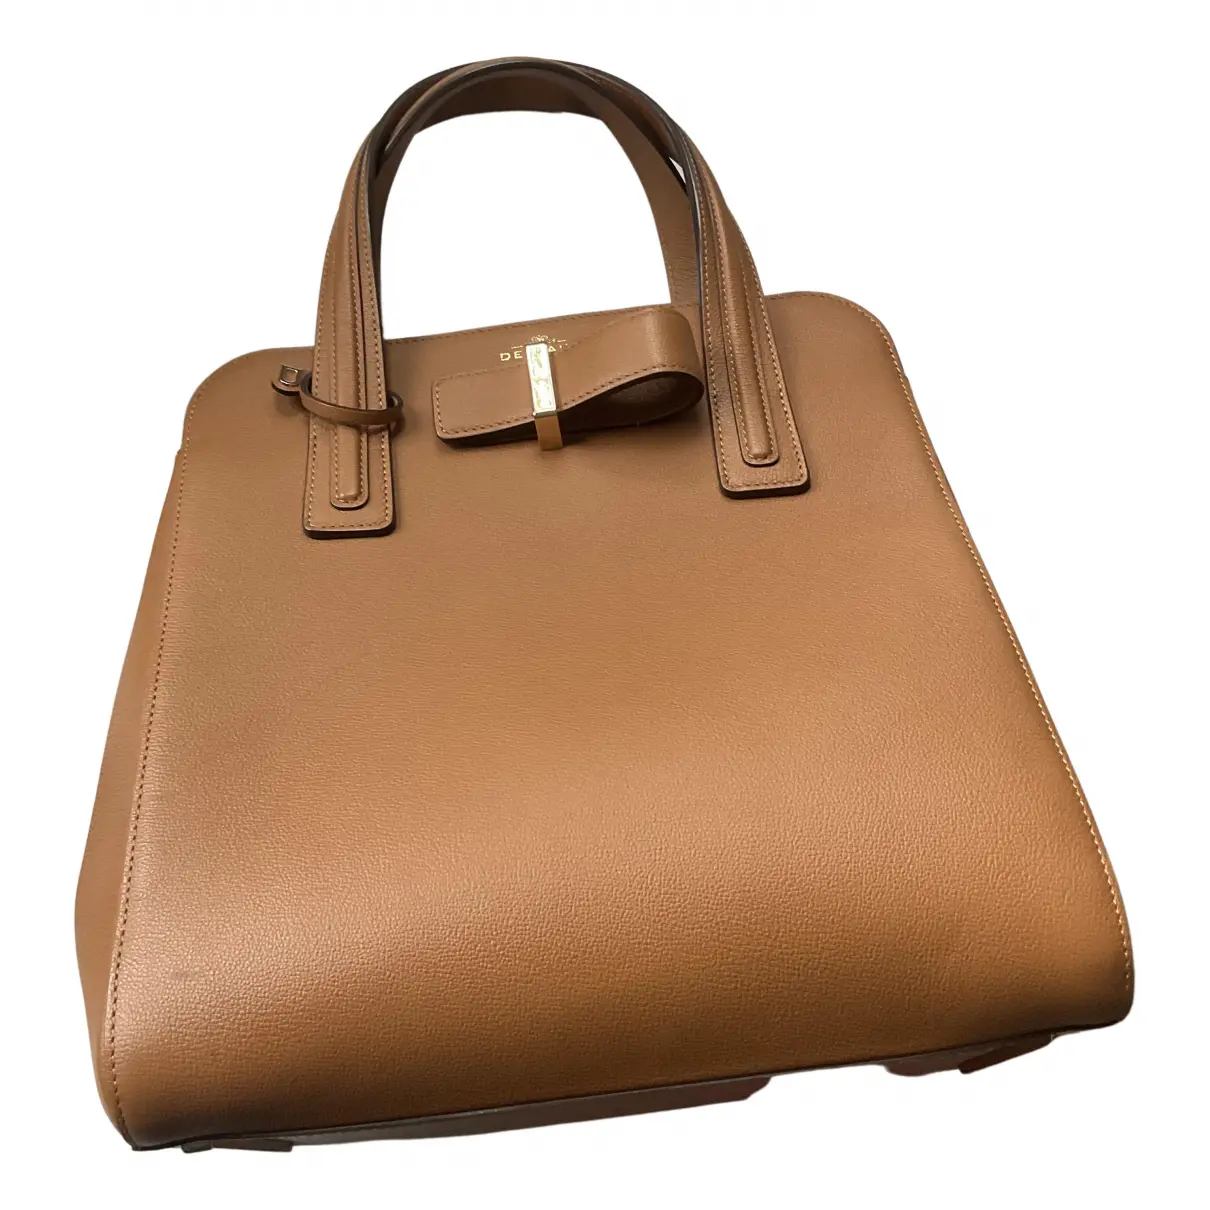 Simplissime leather handbag Delvaux